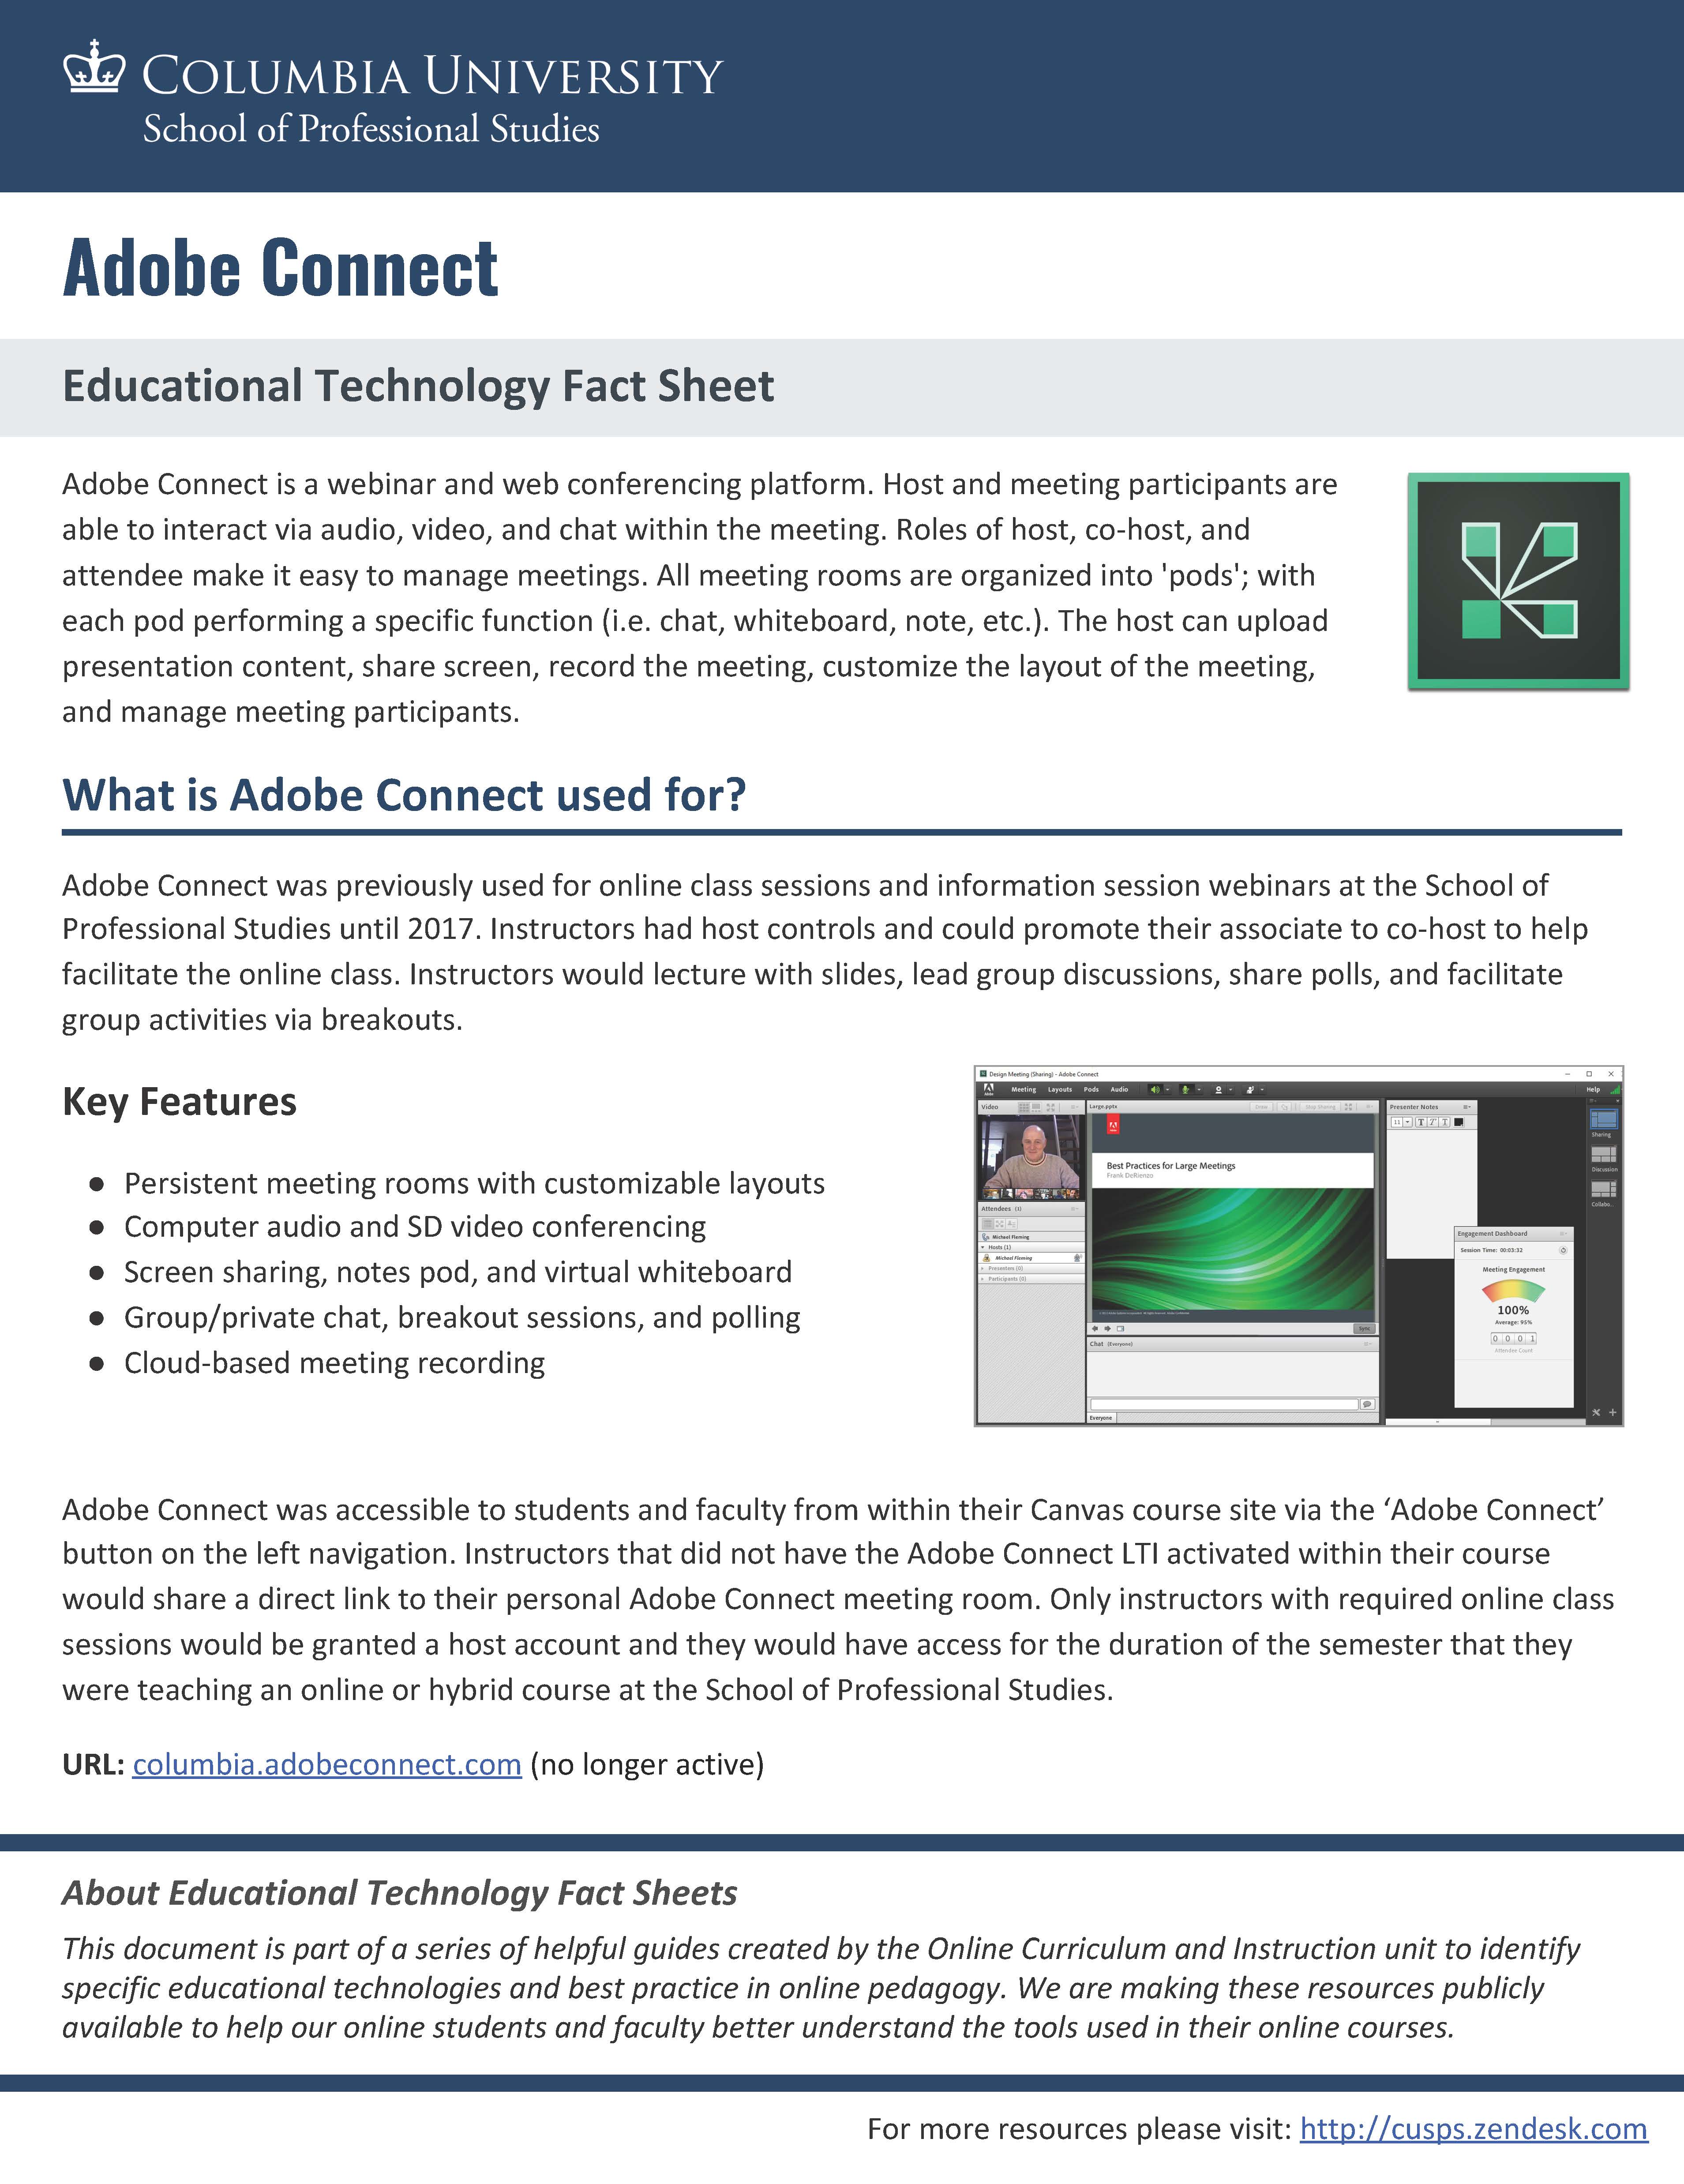 Adobe_Connect_-_Educational_Technology_Fact_Sheet.jpg